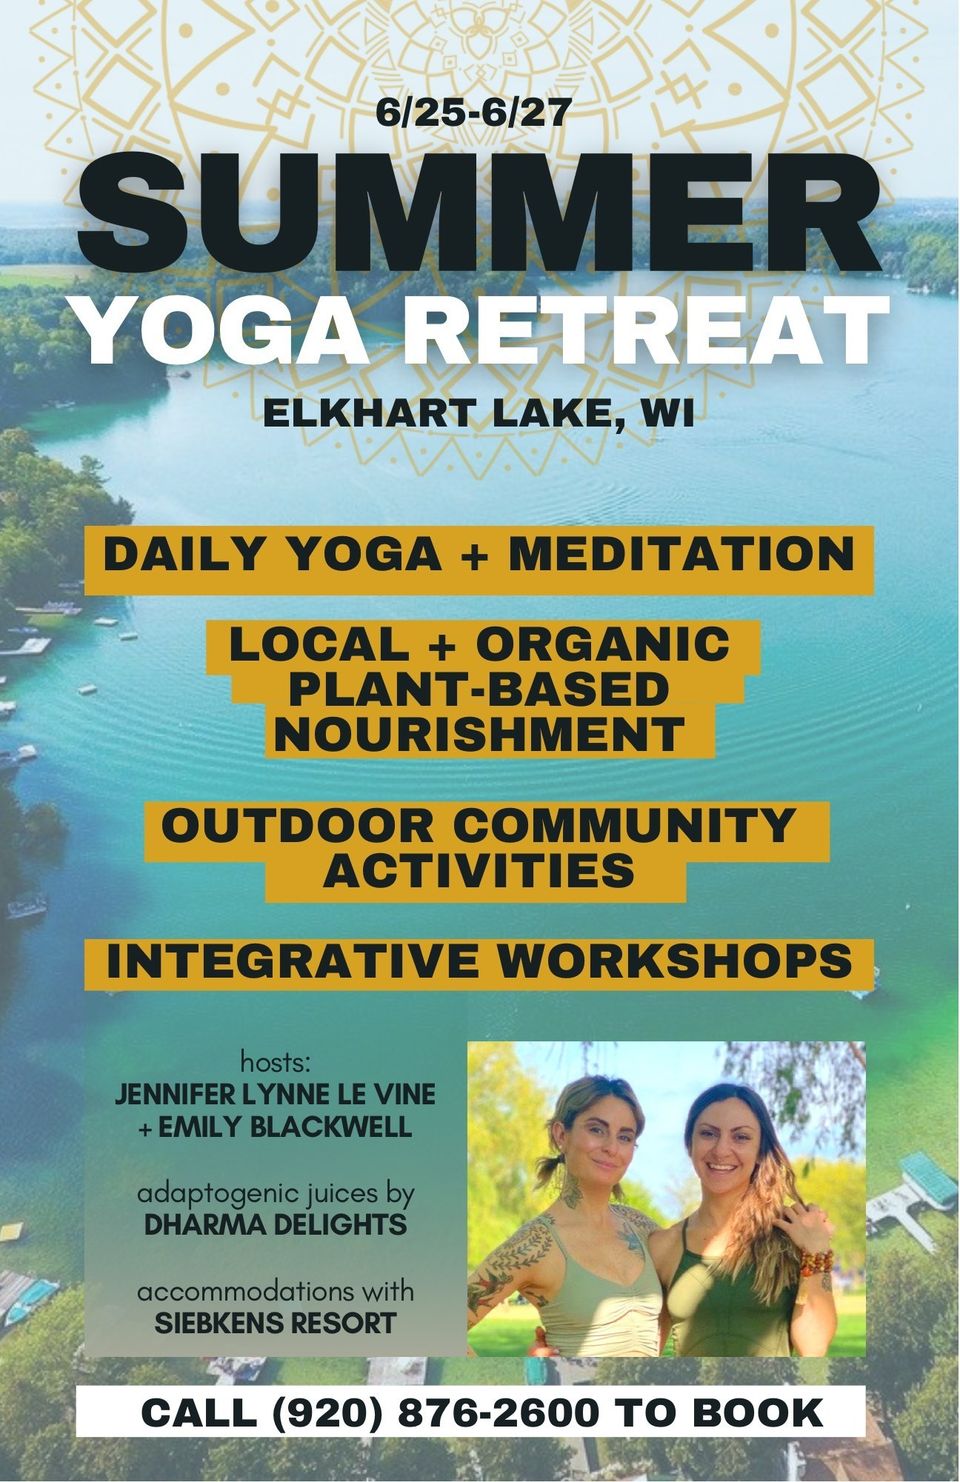 Yoga retreat weekend